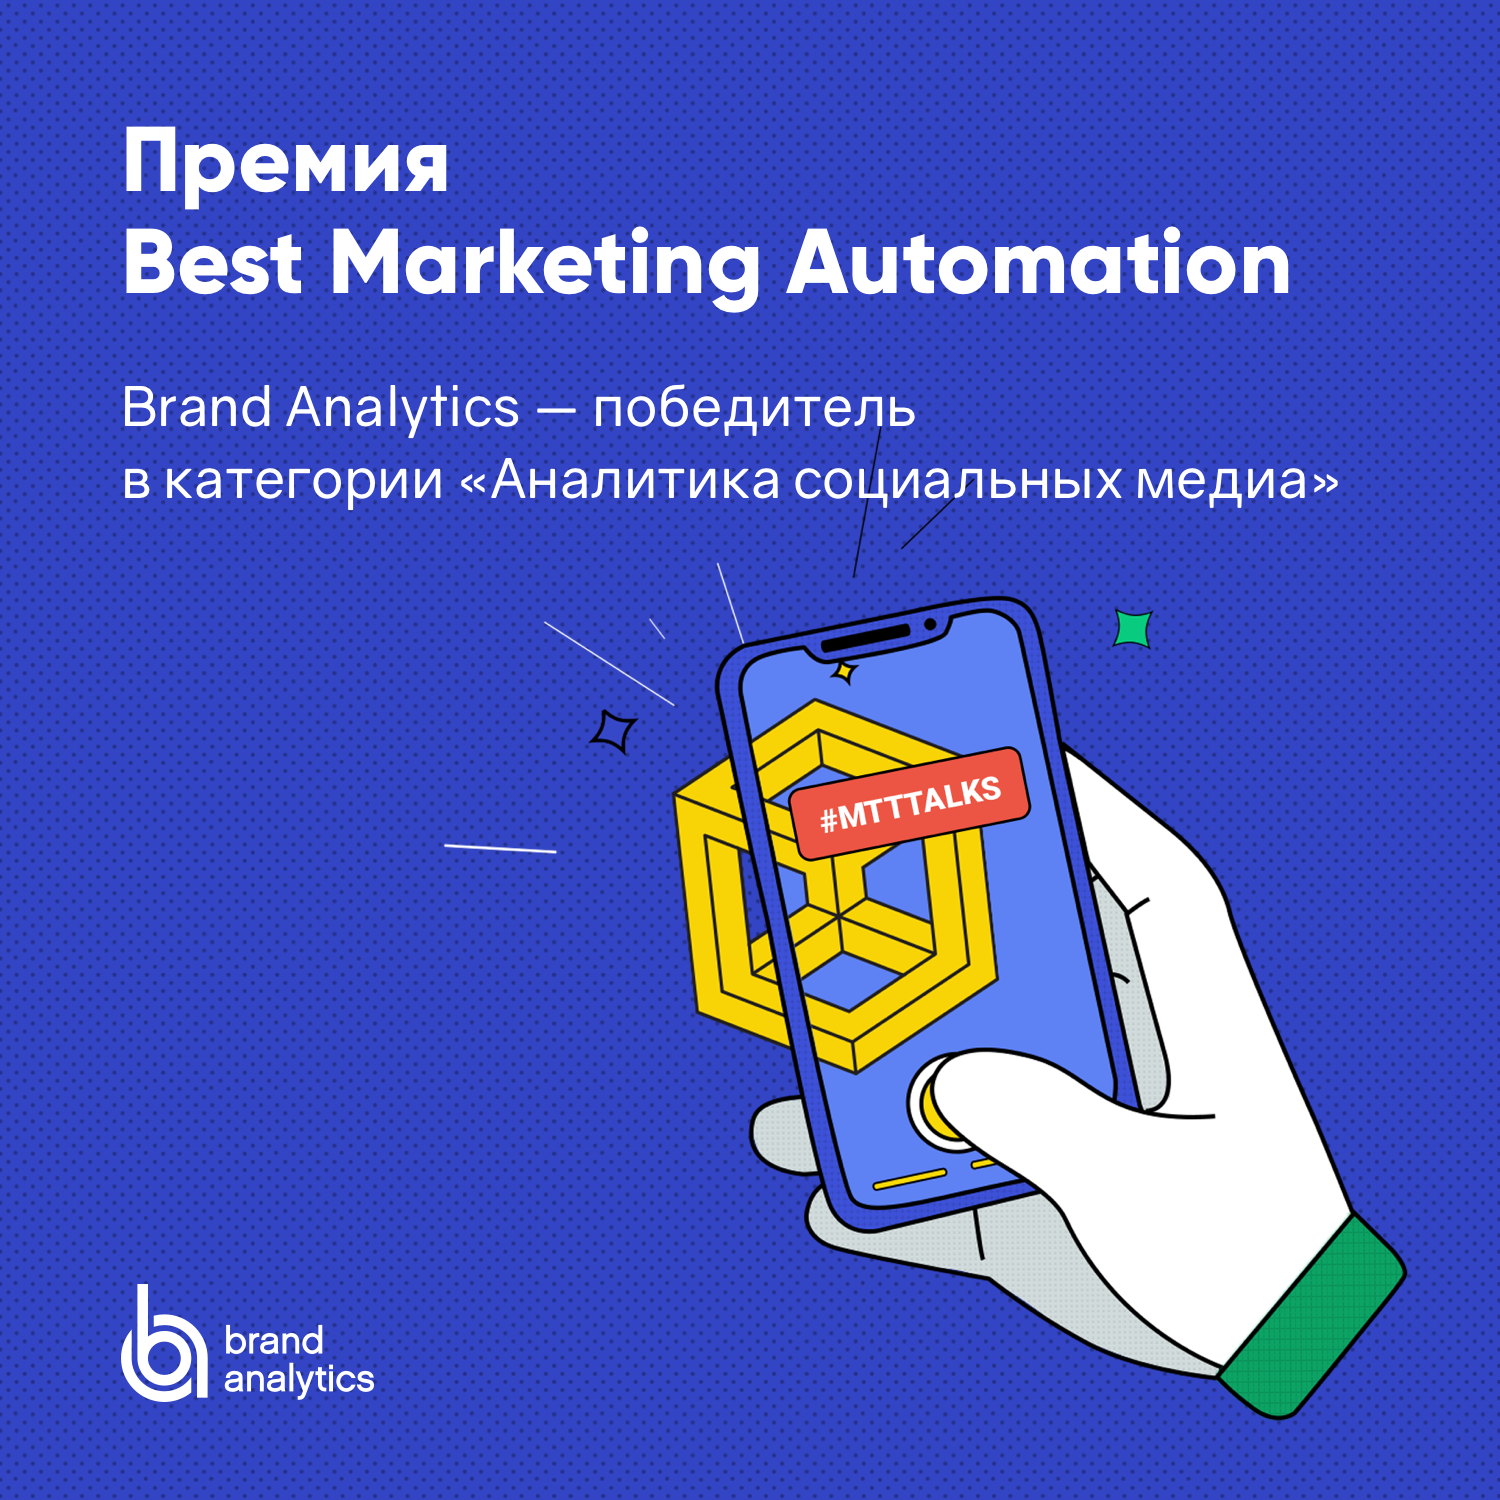 Brand Analytics лучшая система анализа соцмедиа в рейтинге Best Marketing Automation